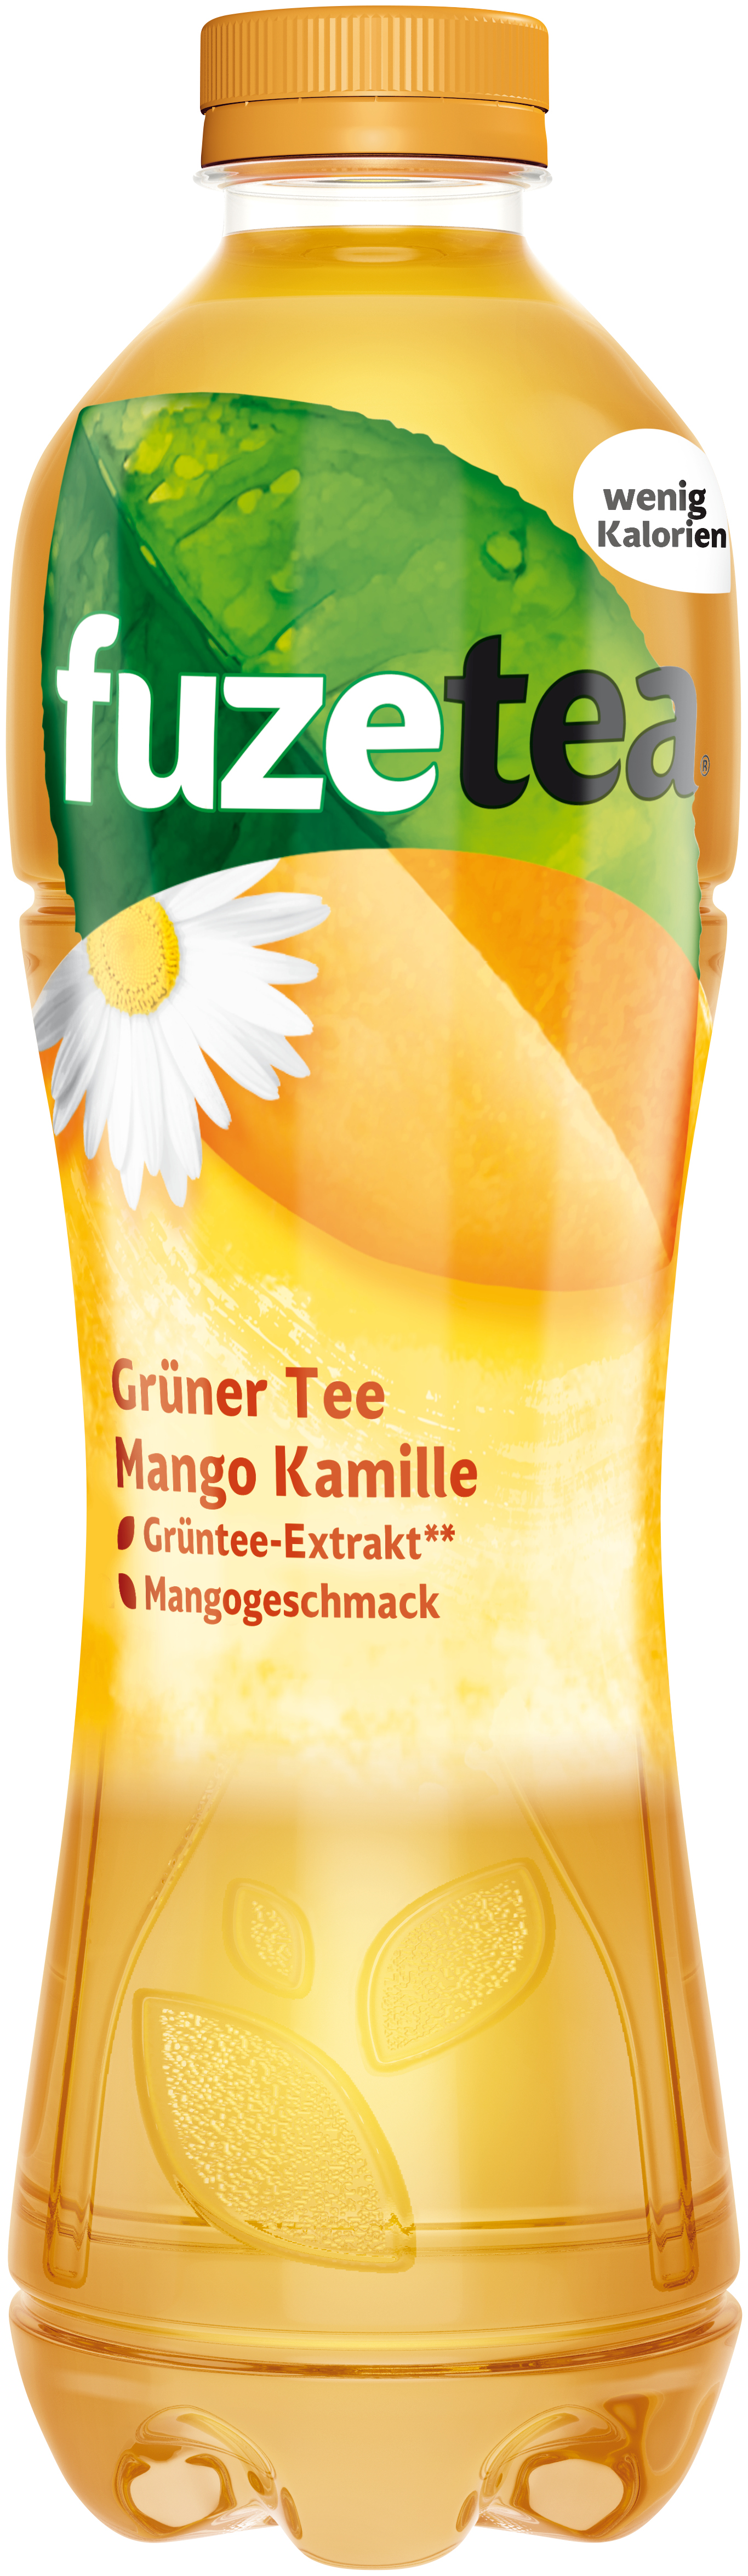 Fuze Tea Grüner Tee Mango Kamille 6x1l EW